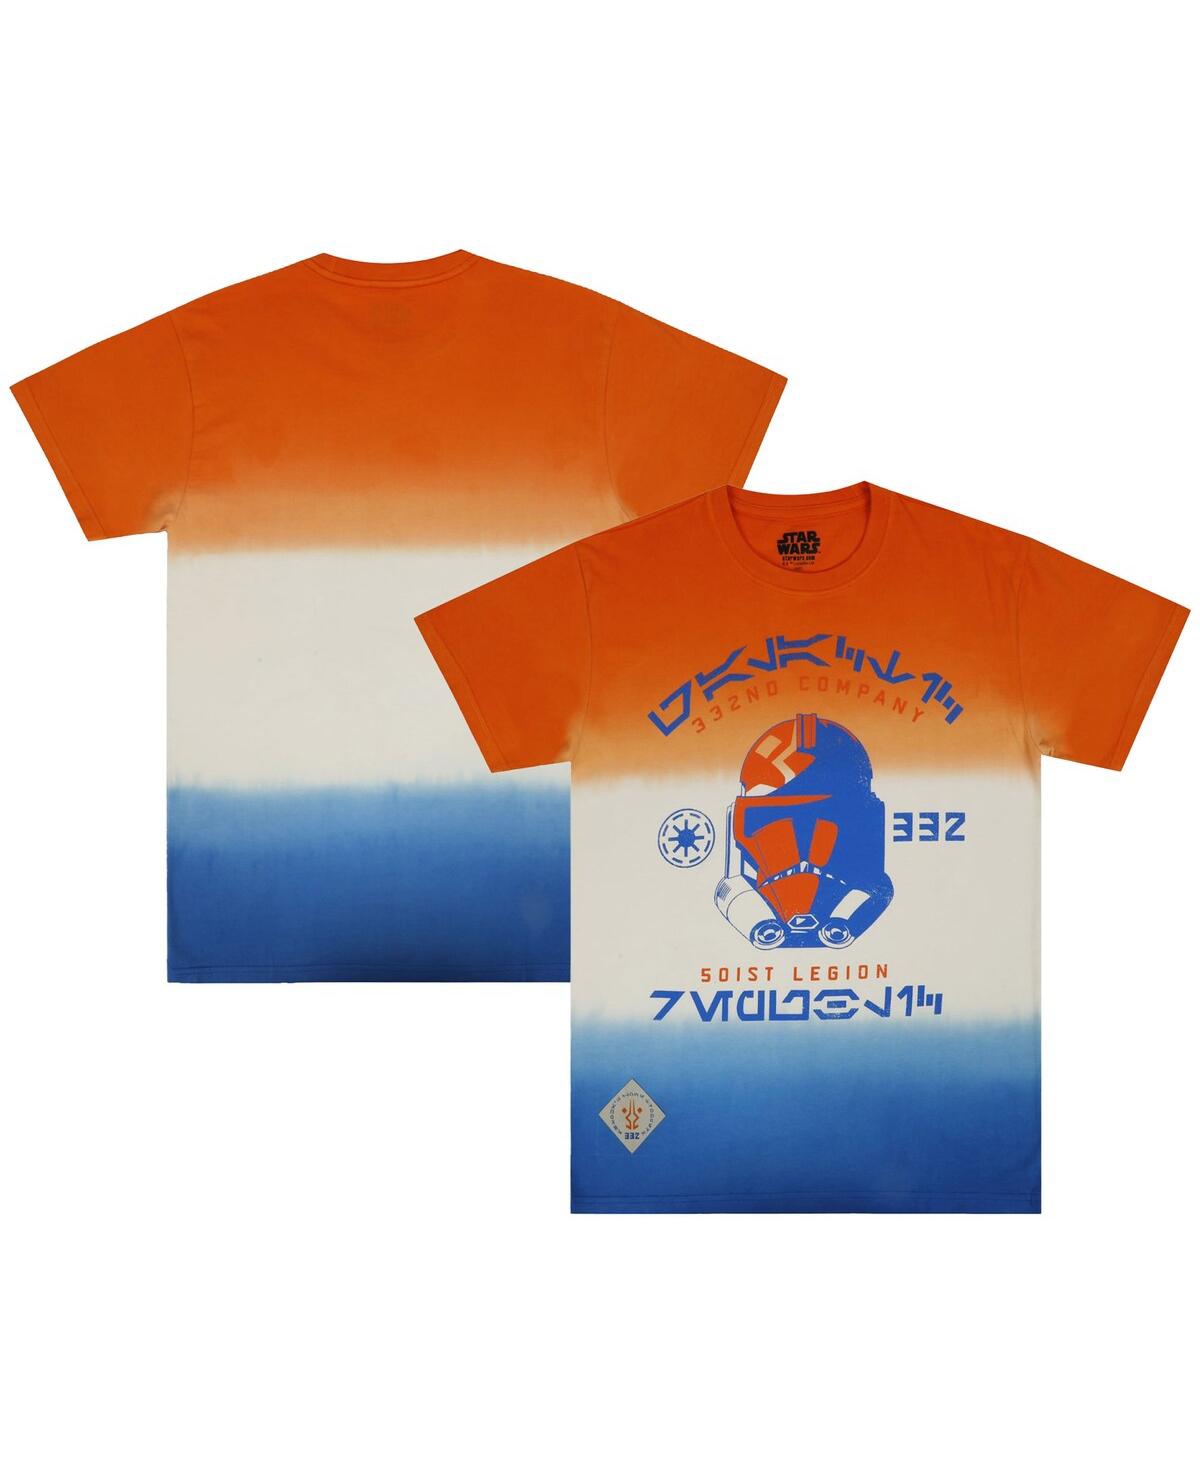 Unisex Orange/Blue Star Wars Ahsoka 332nd Company Colorblock T-Shirt - Orange, Blue